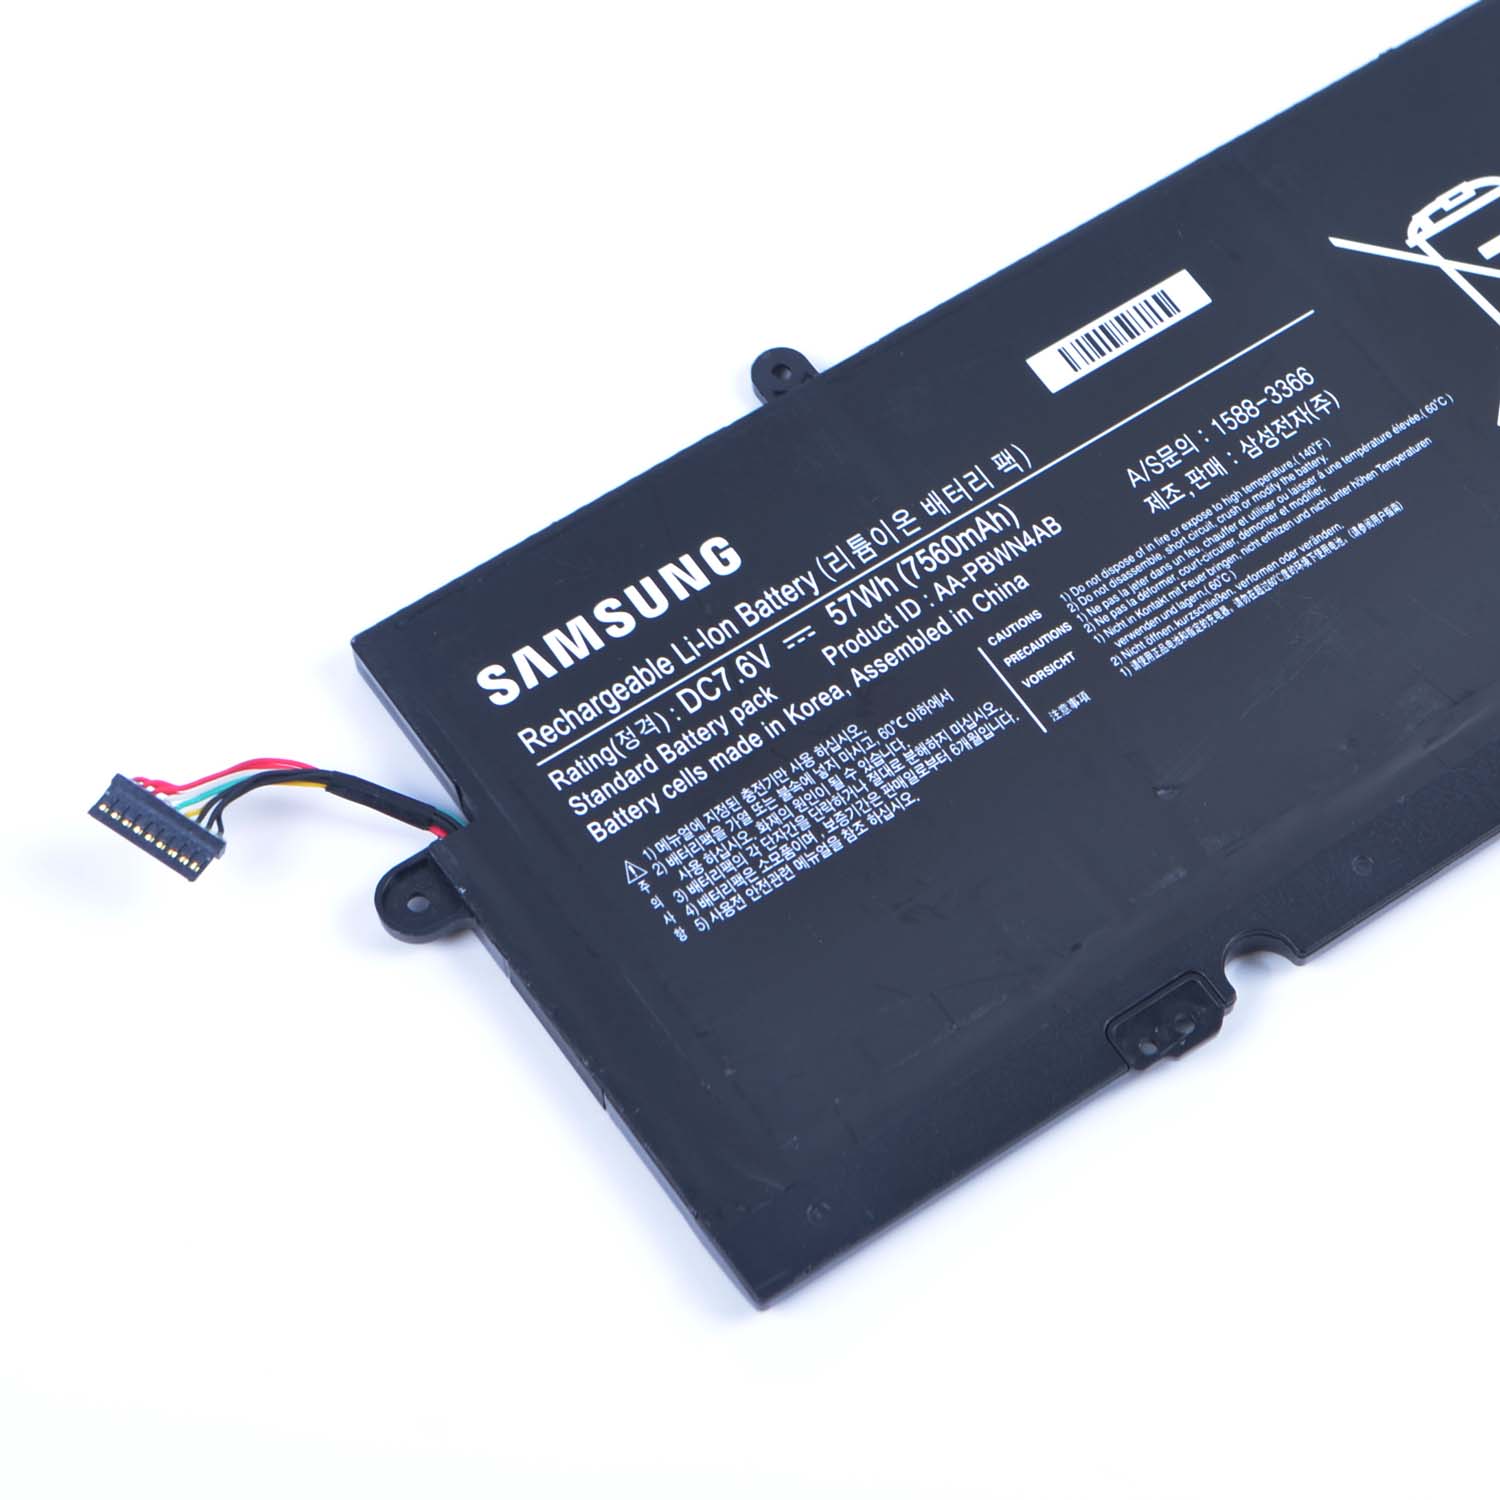 Samsung Samsung 730U3E-K01 battery